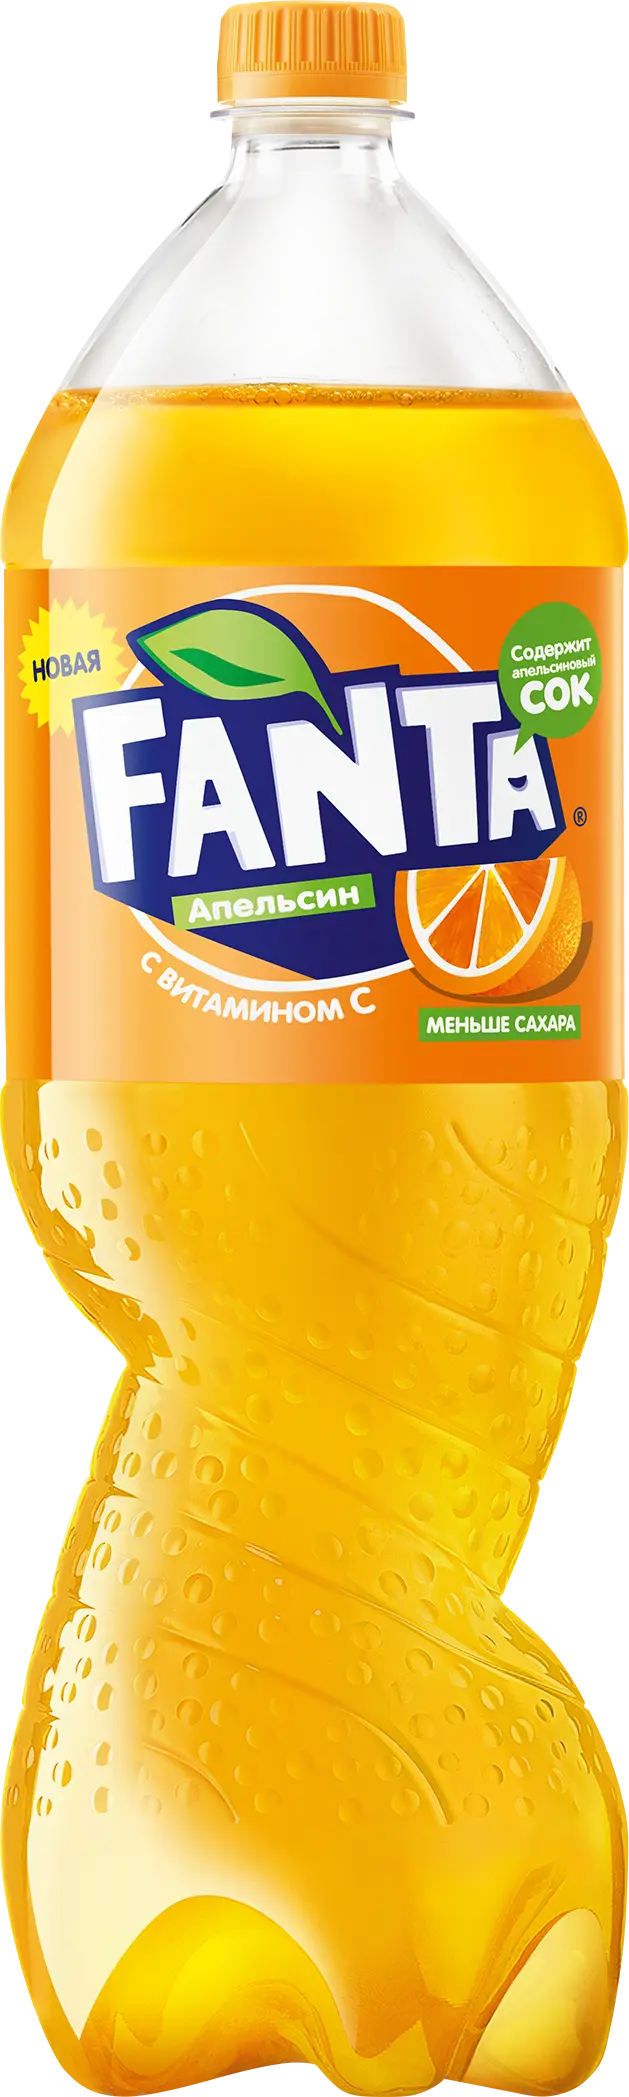 Fanta (Фанта)